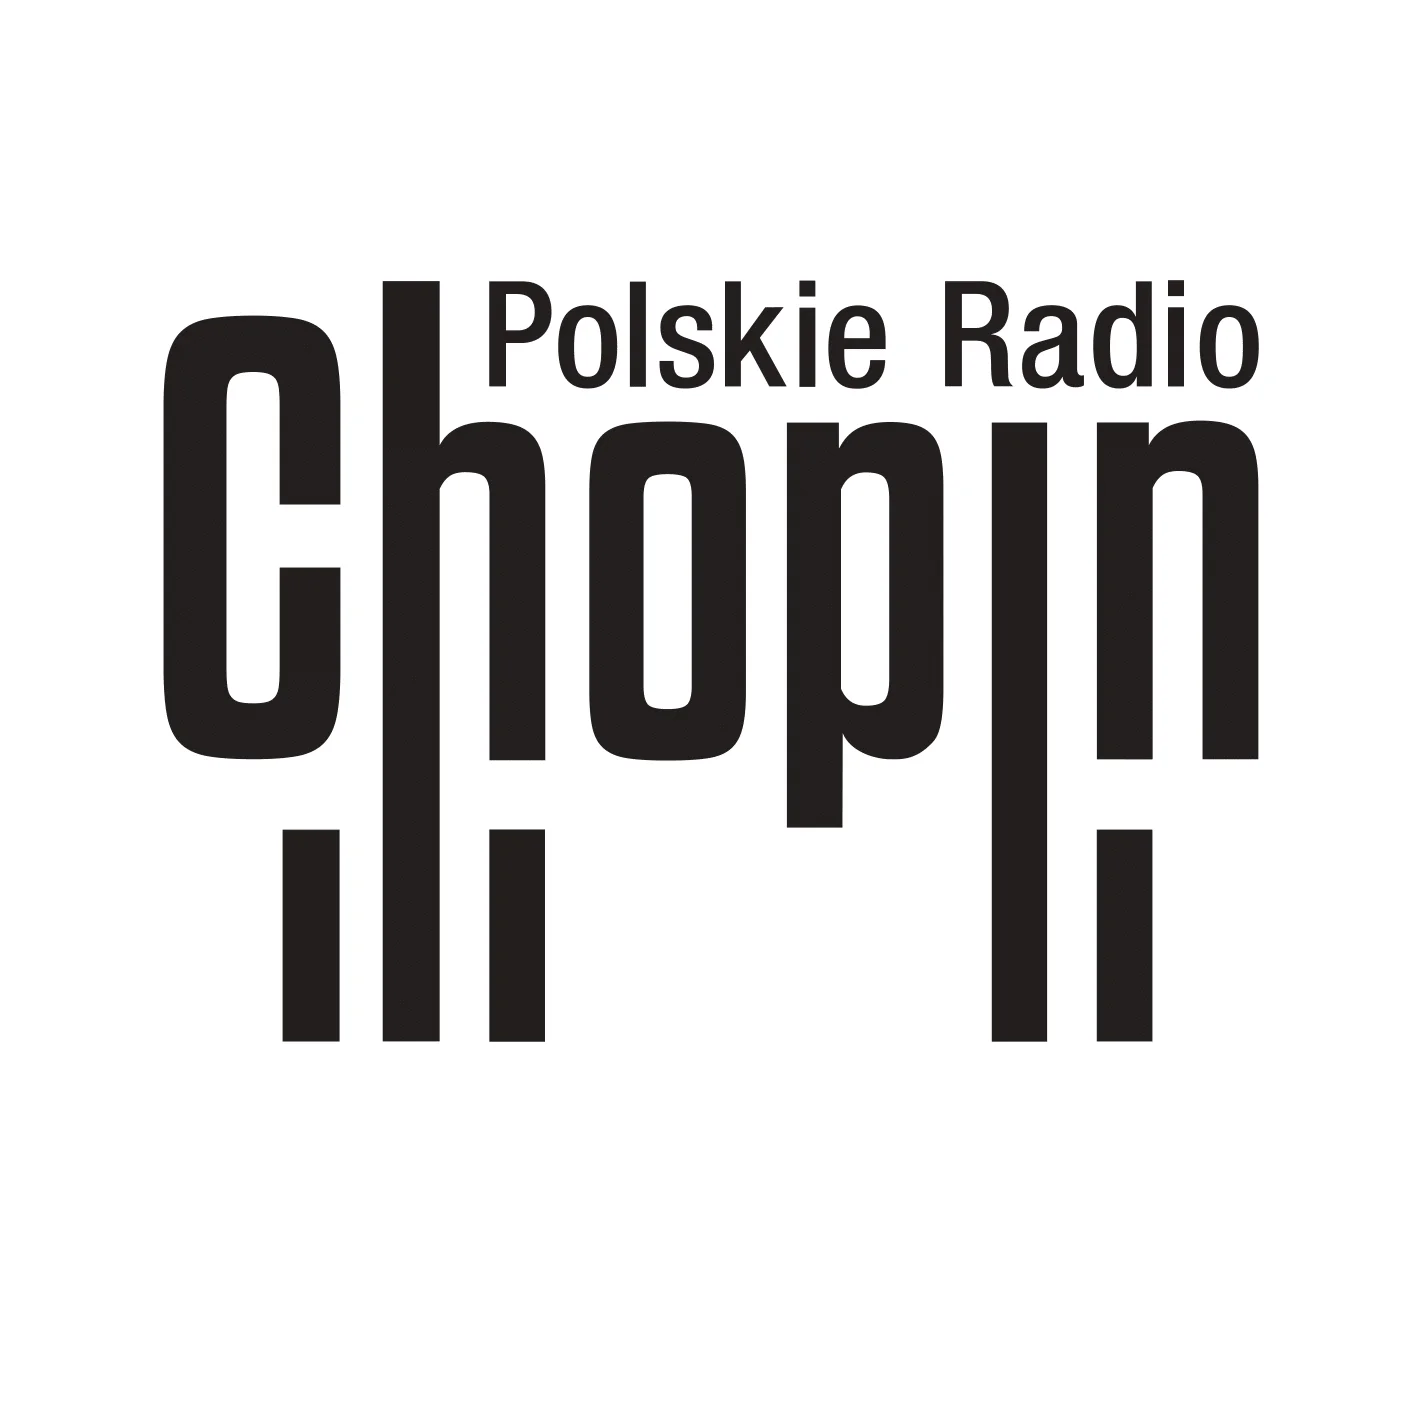 Chopin Polskie Radio